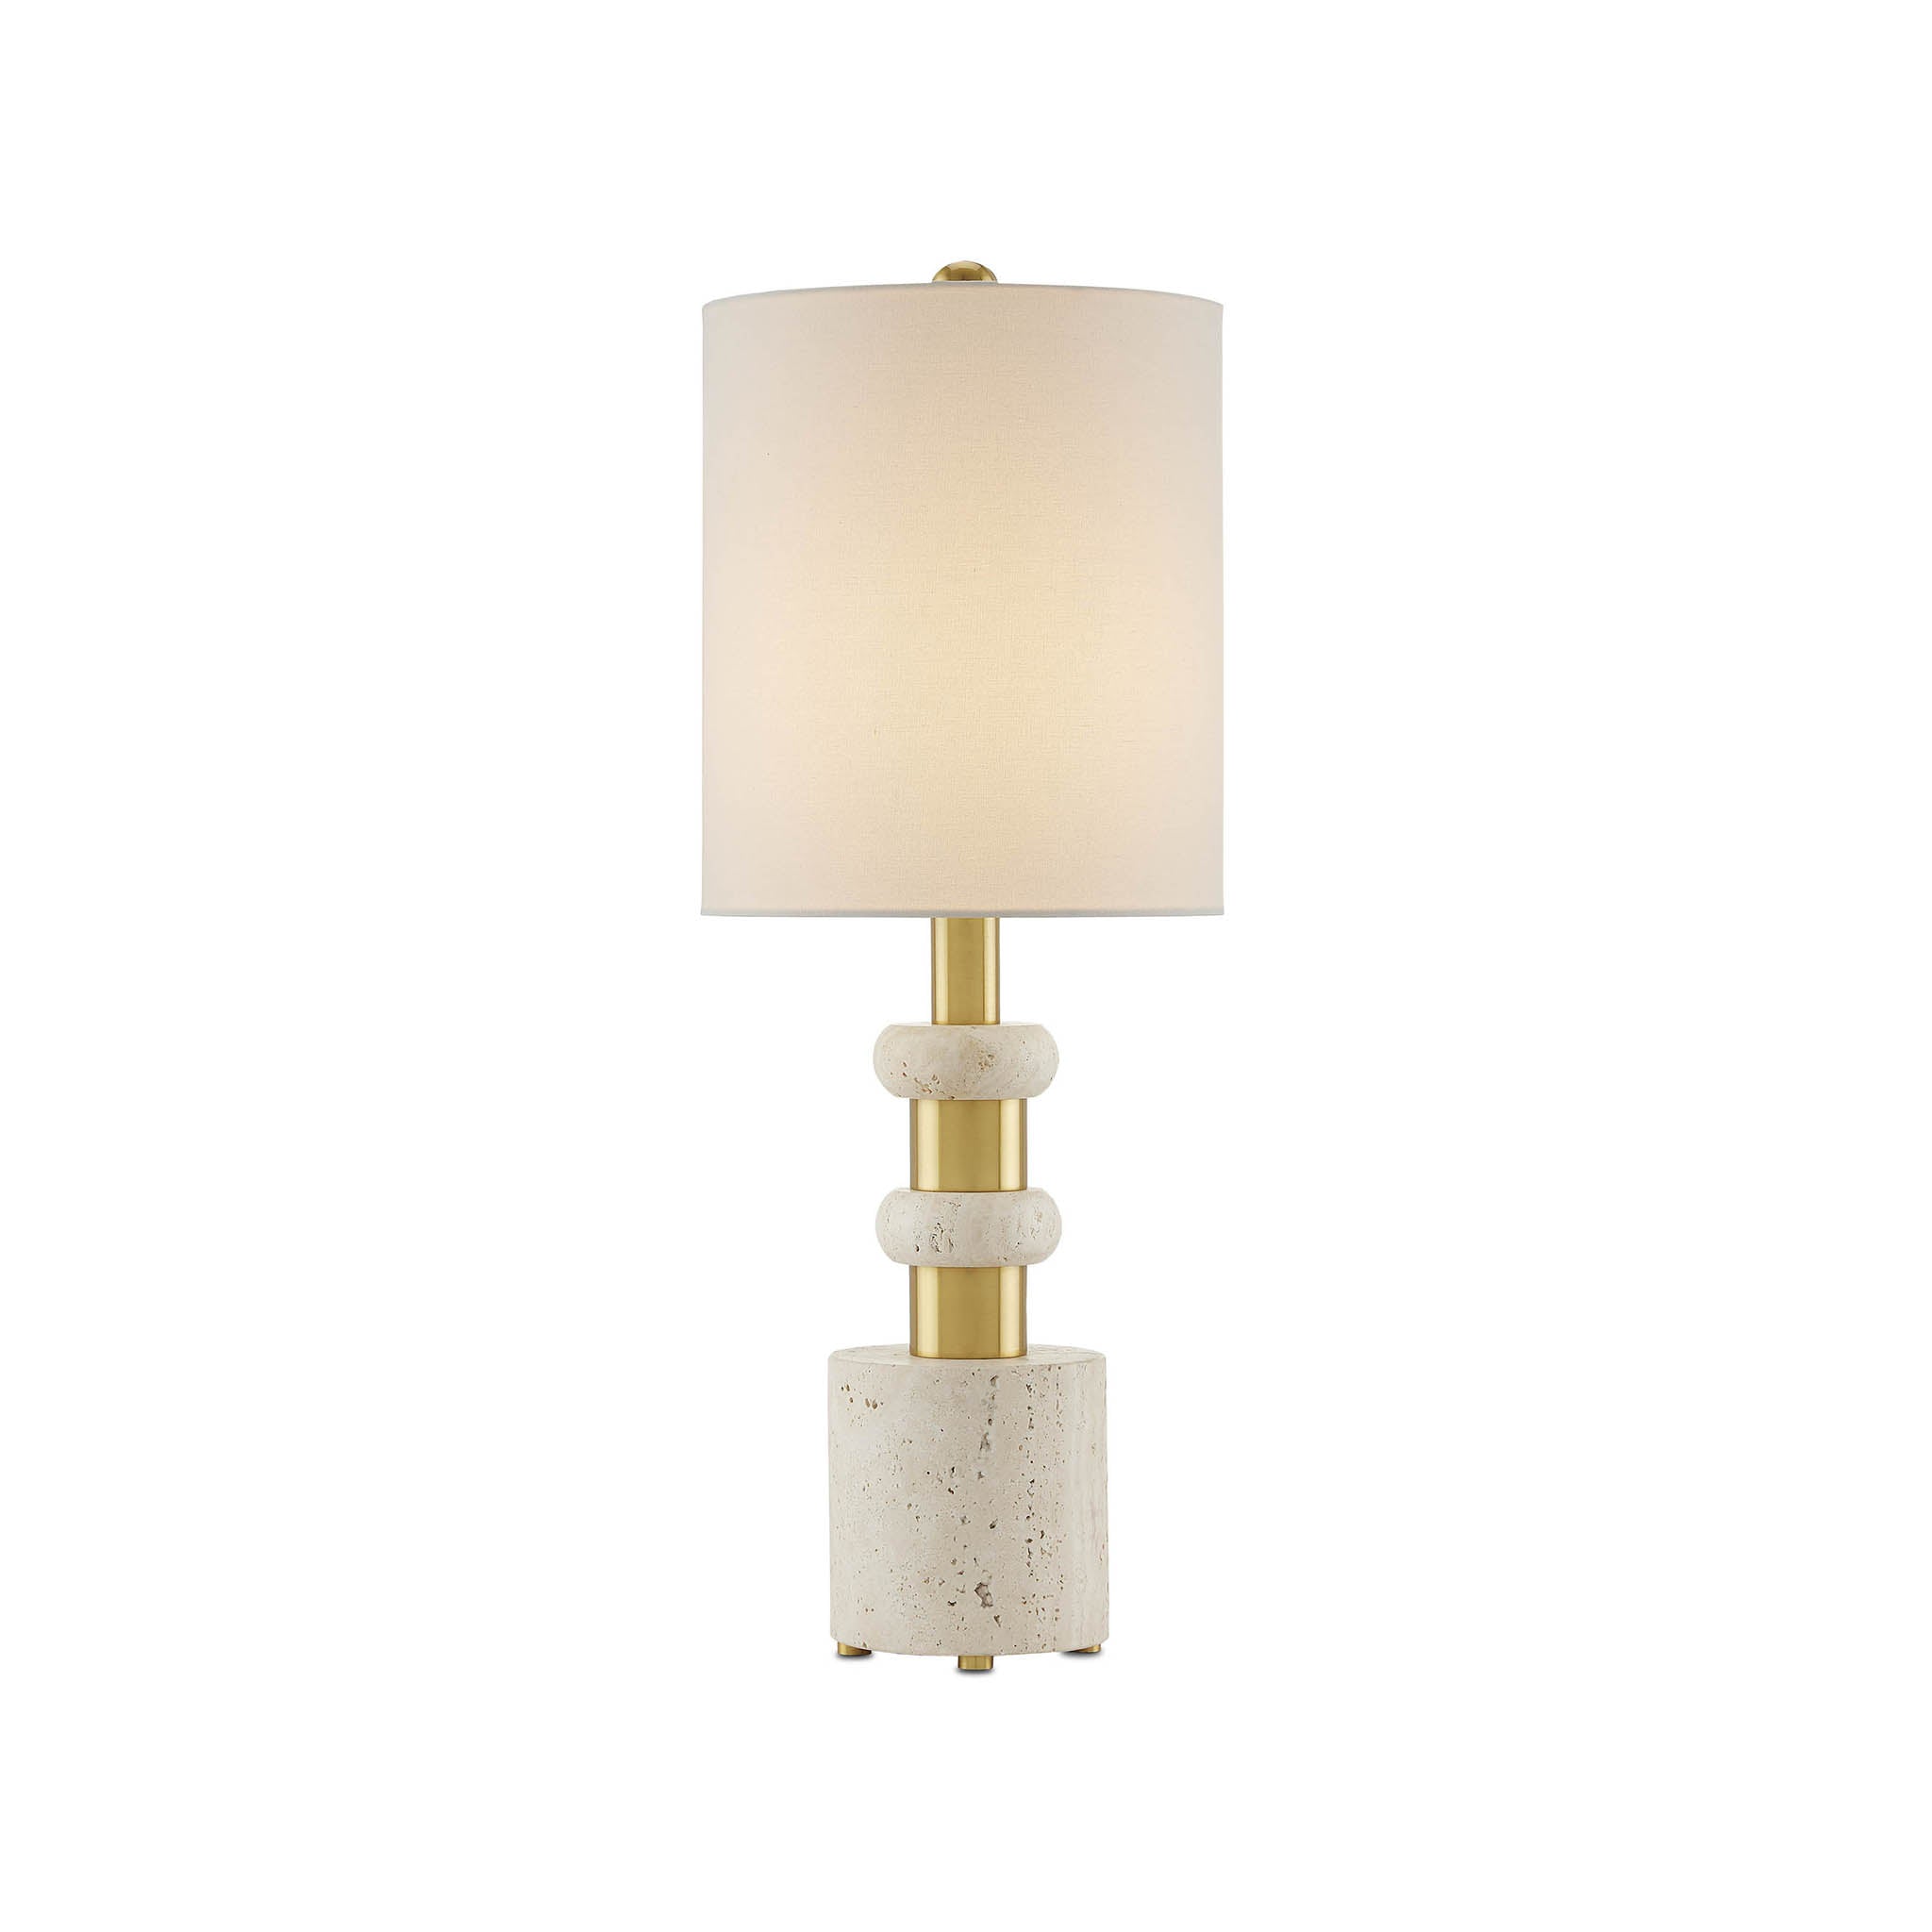 Gramercy Table Lamp